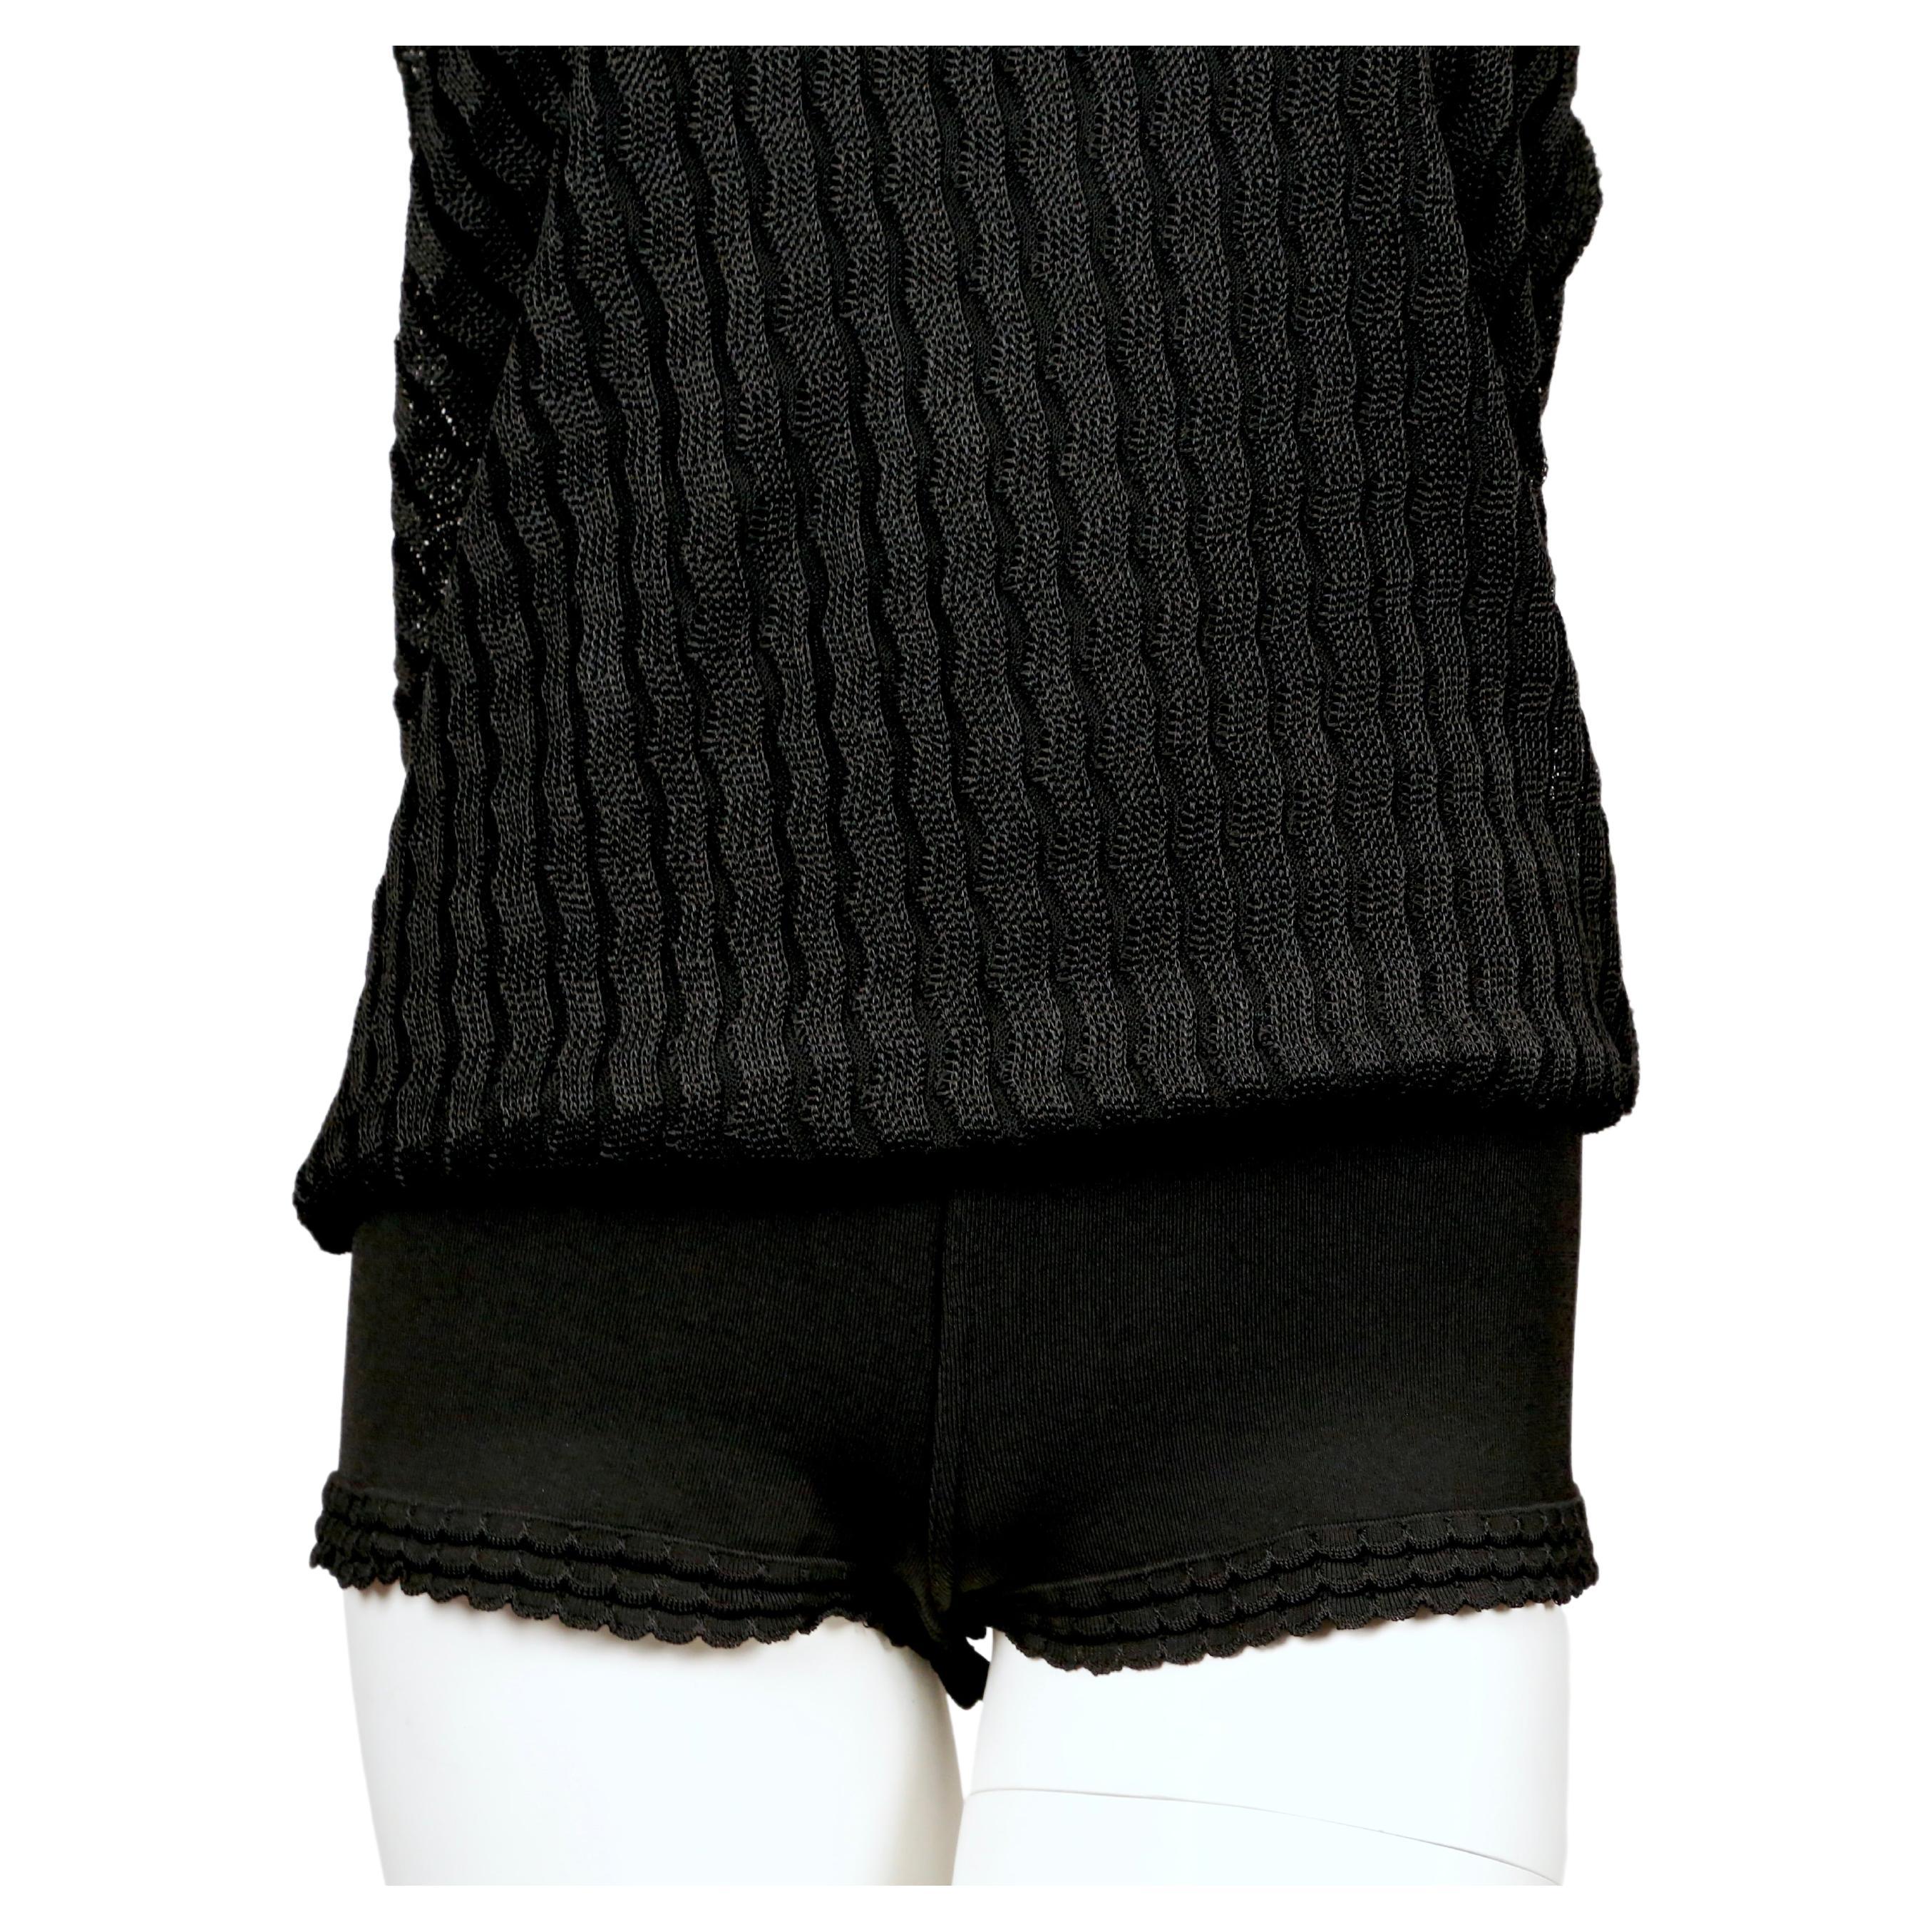 1992 AZZEDINE ALAIA black open knit long sleeveless dress 2